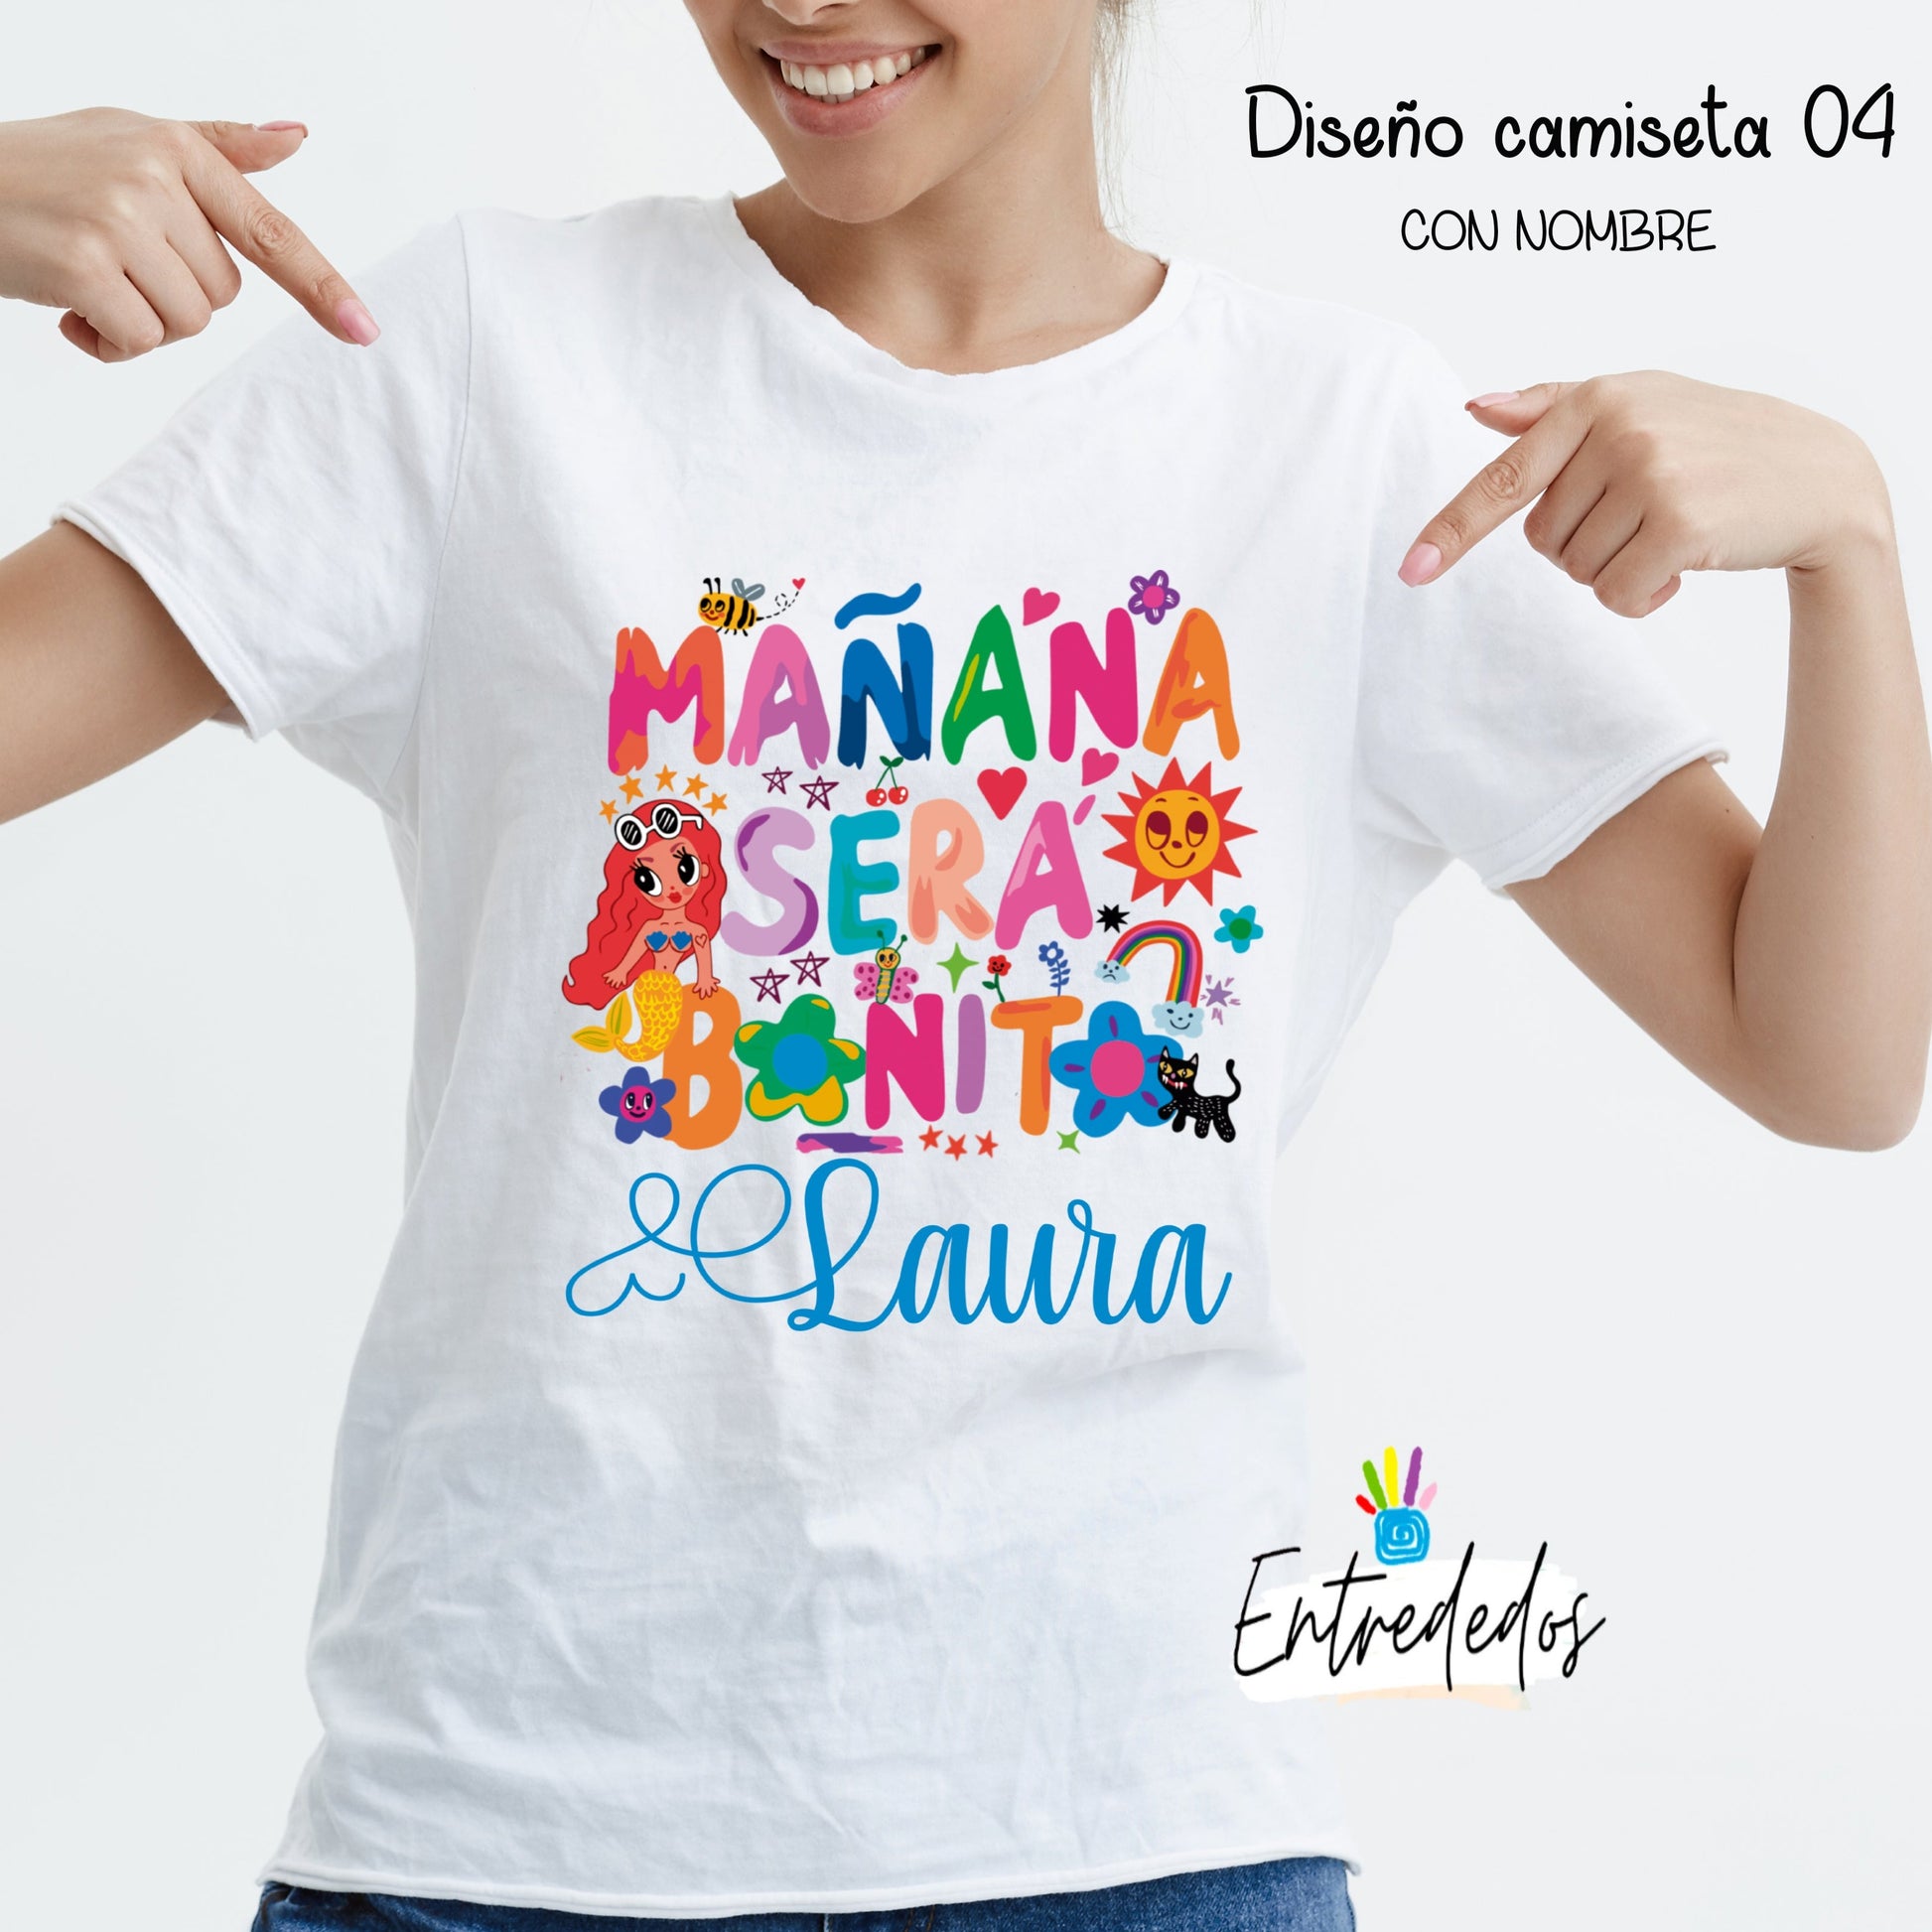 Camiseta Mañana Sera Bonito, Camisa Karol G, Camisa Bichota